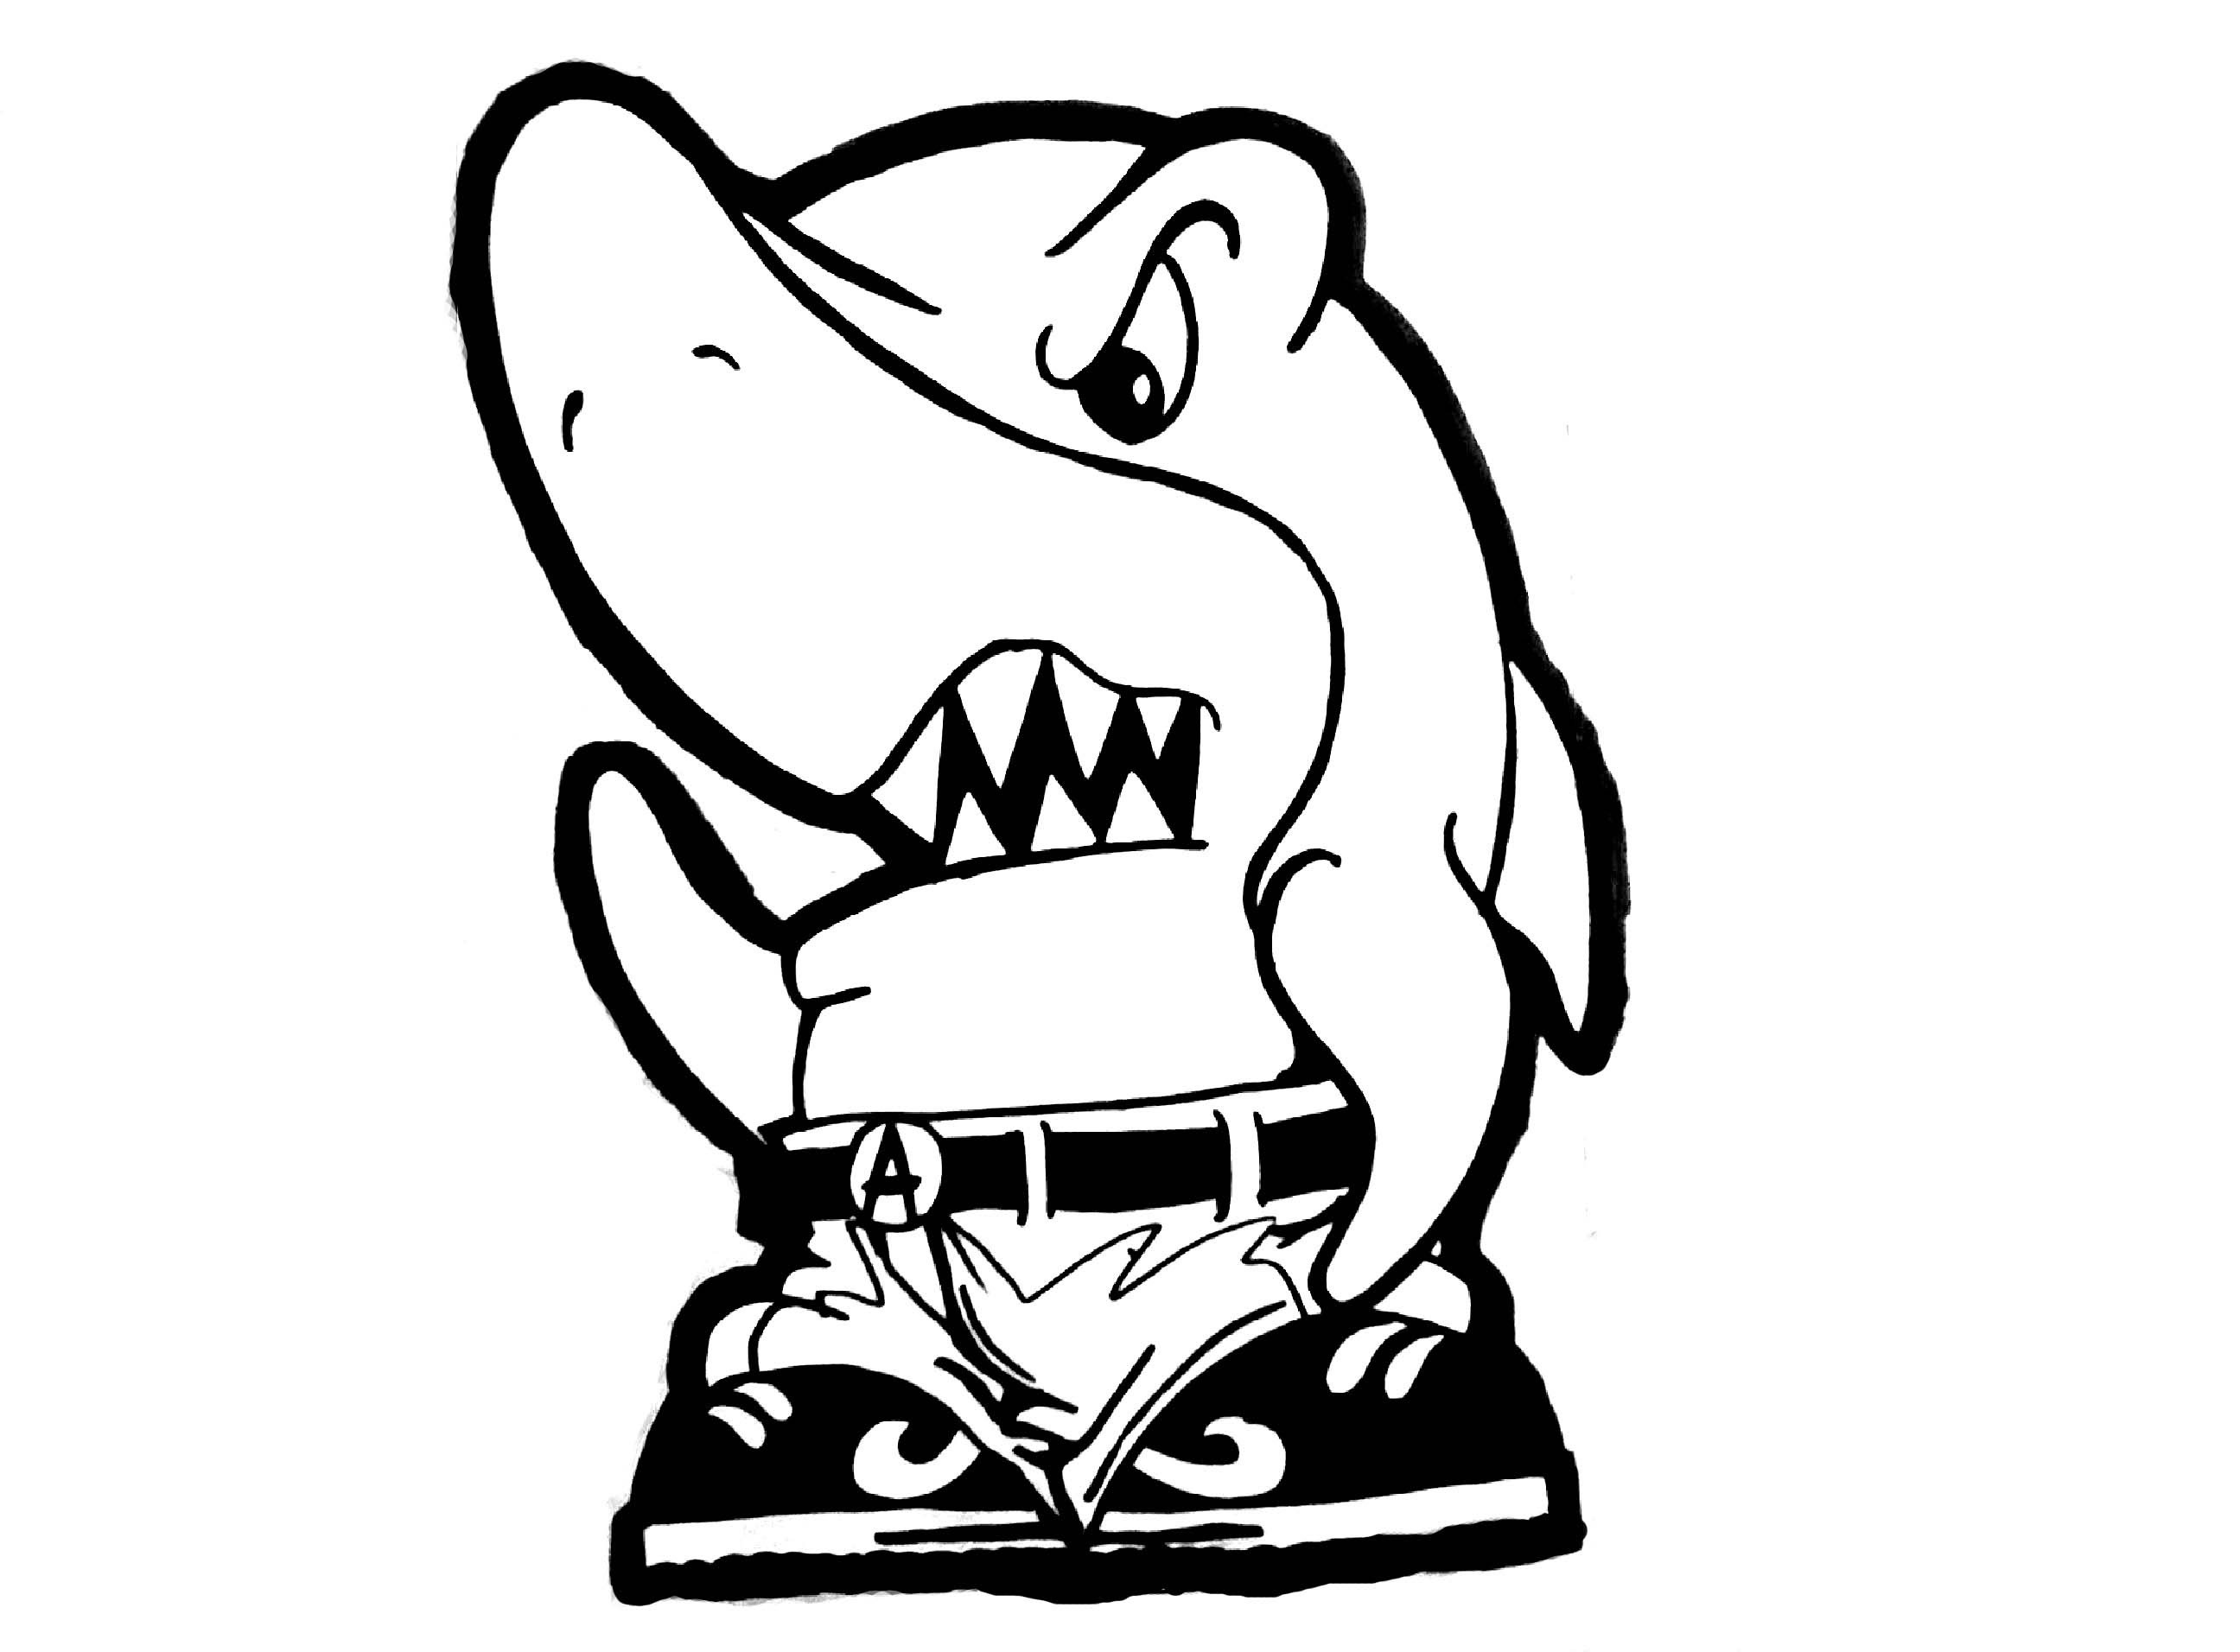 Graffiti Cholo Drawings Easy Shark Drawing Wizard Sketches Cool Lowrider Ca...